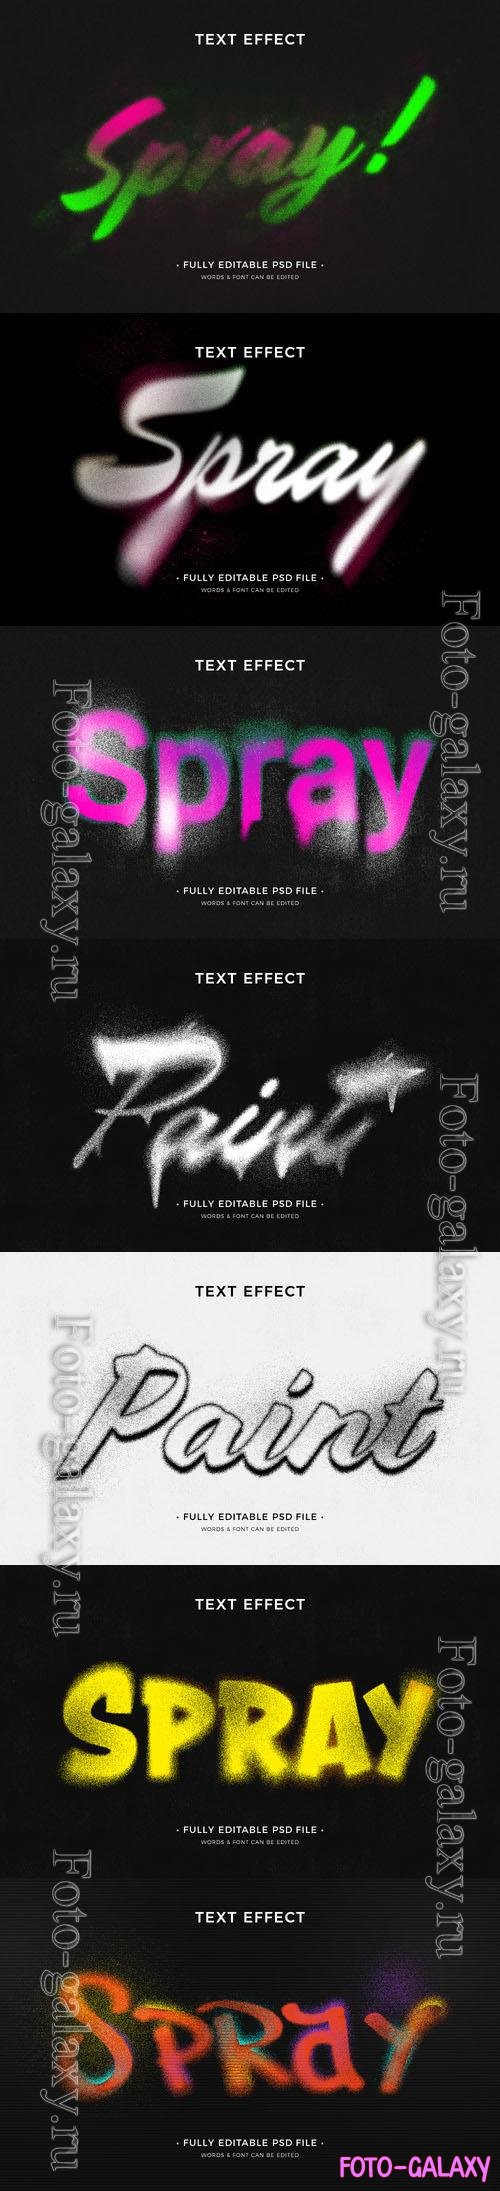 Psd style text effect editable set vol 435 